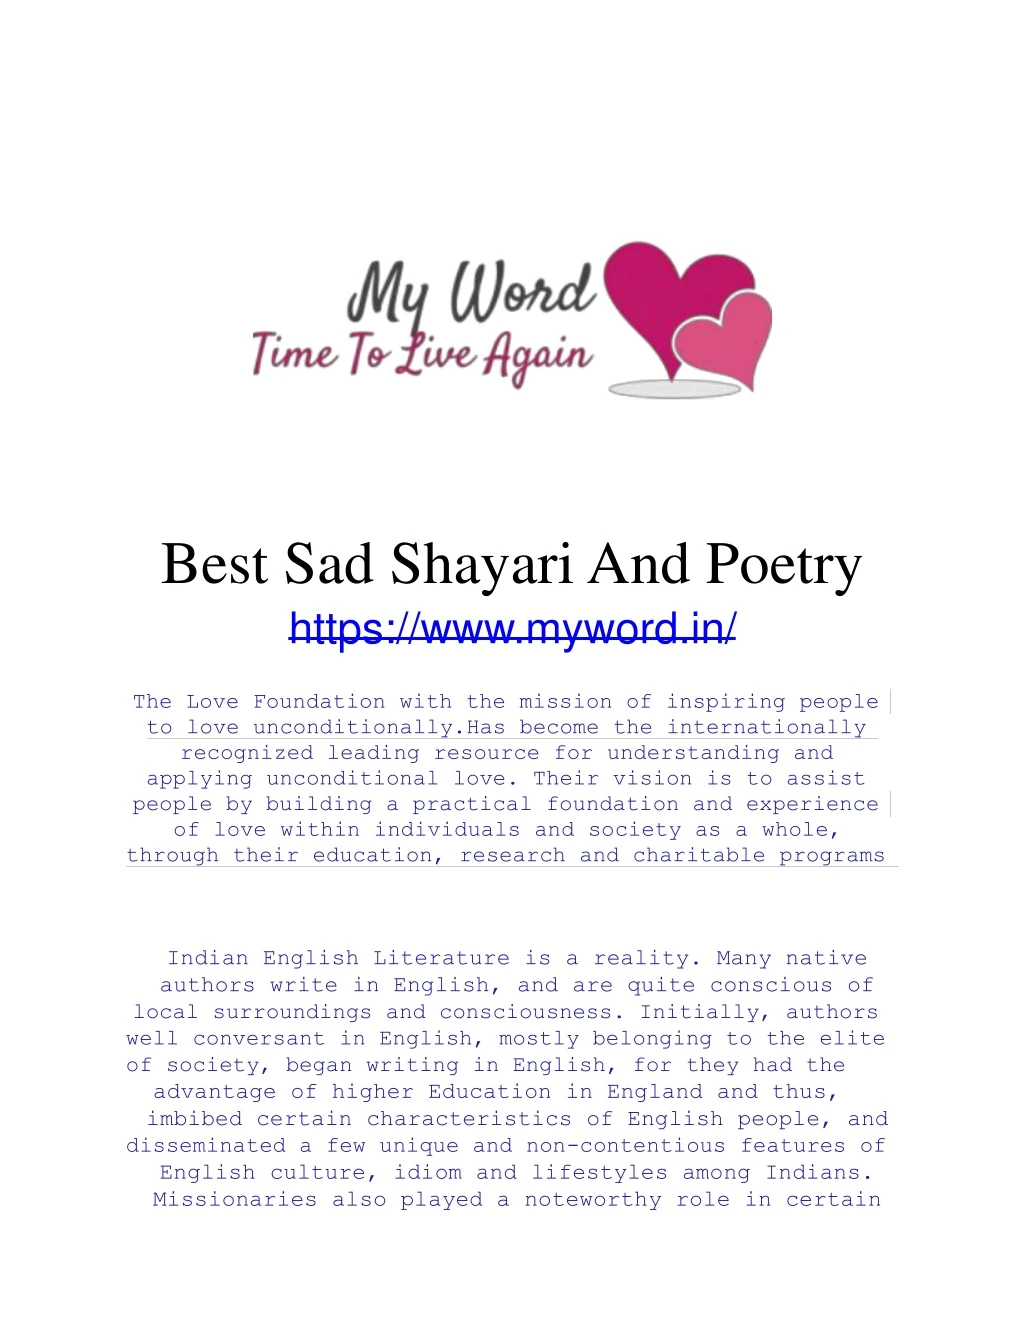 best sad shayari and poetry